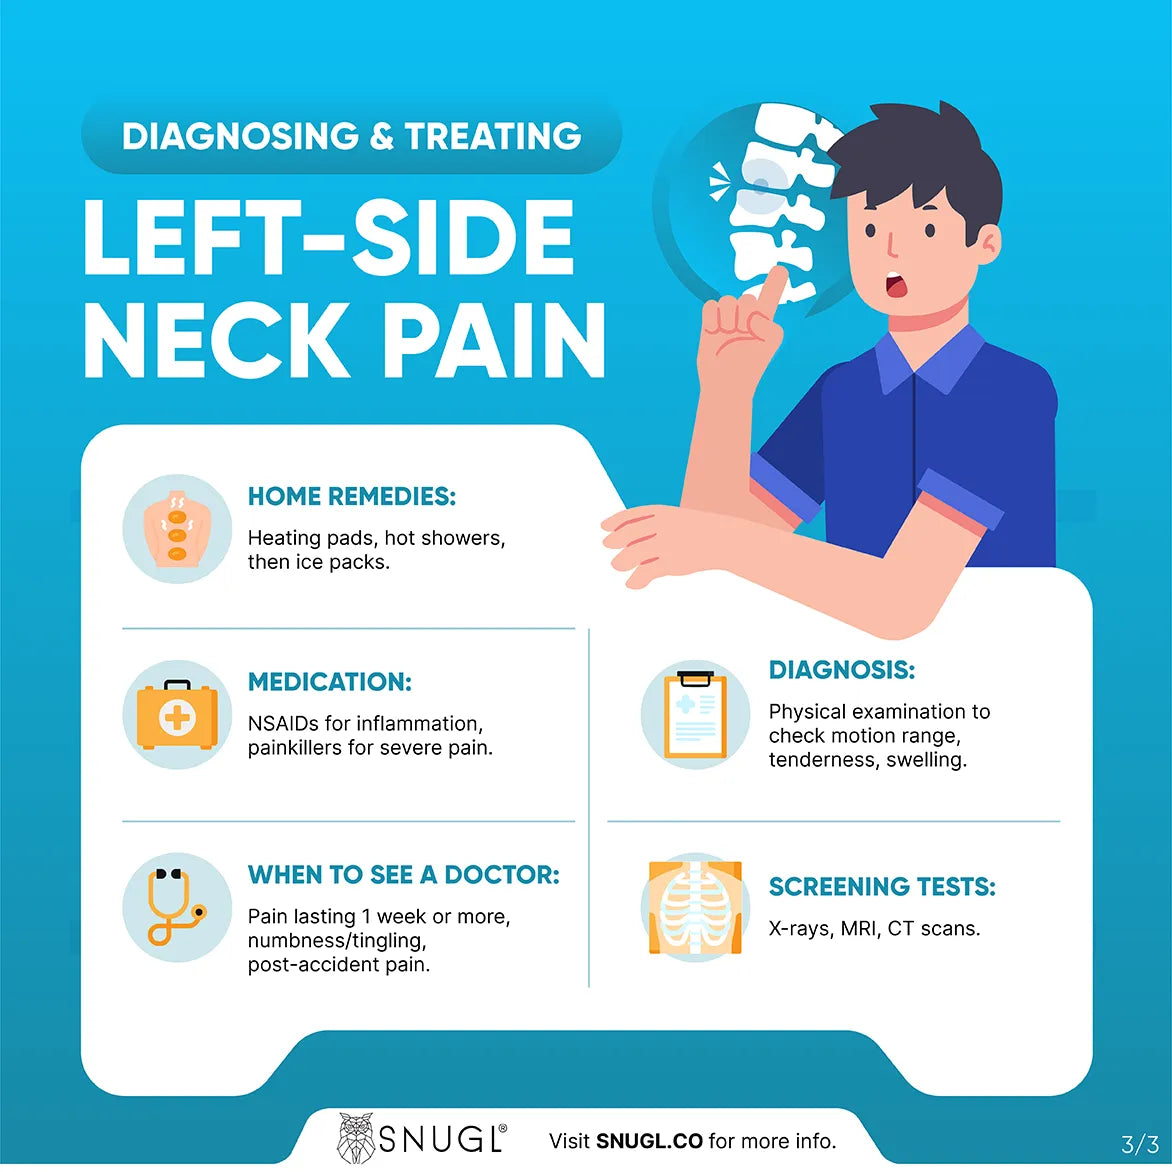 Diagnosing & treating left-side neck pain